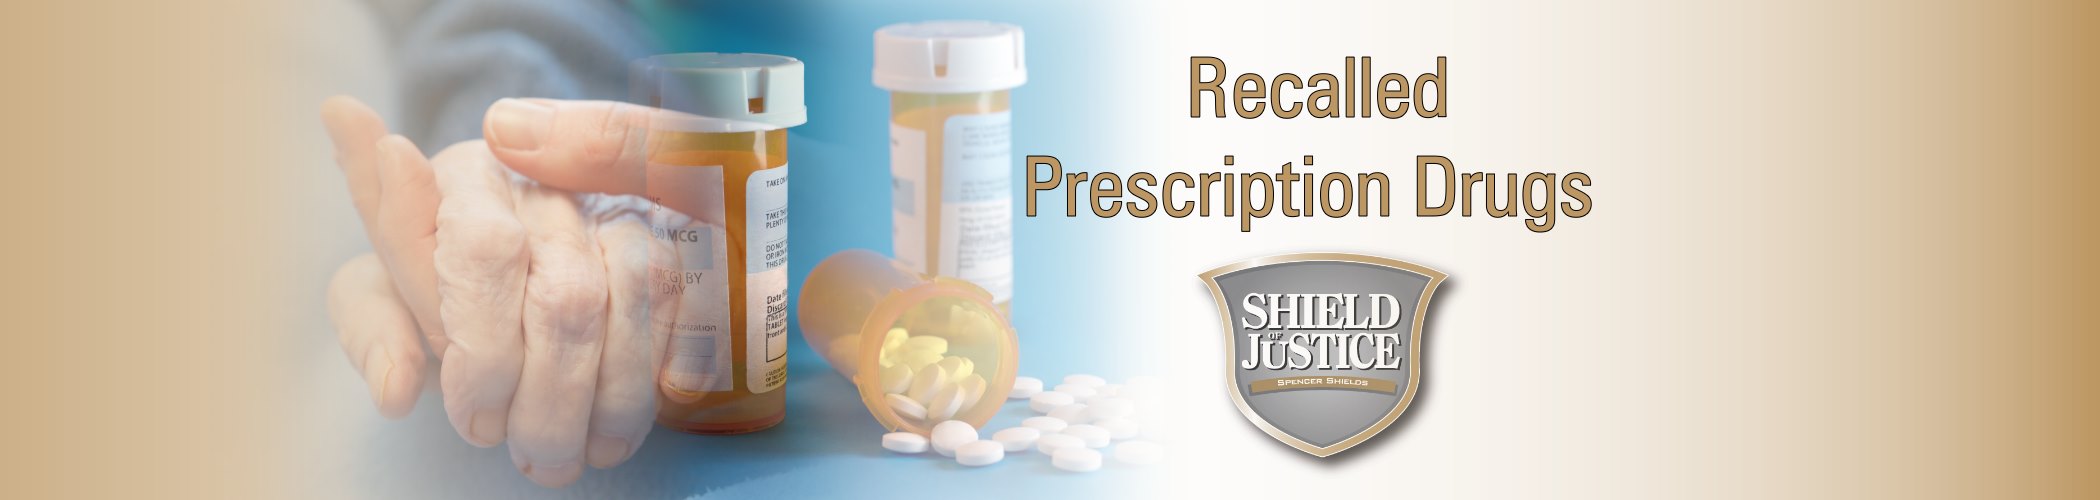 Recalled Prescription Drugs Law Suit - Attorney Spencer Shields